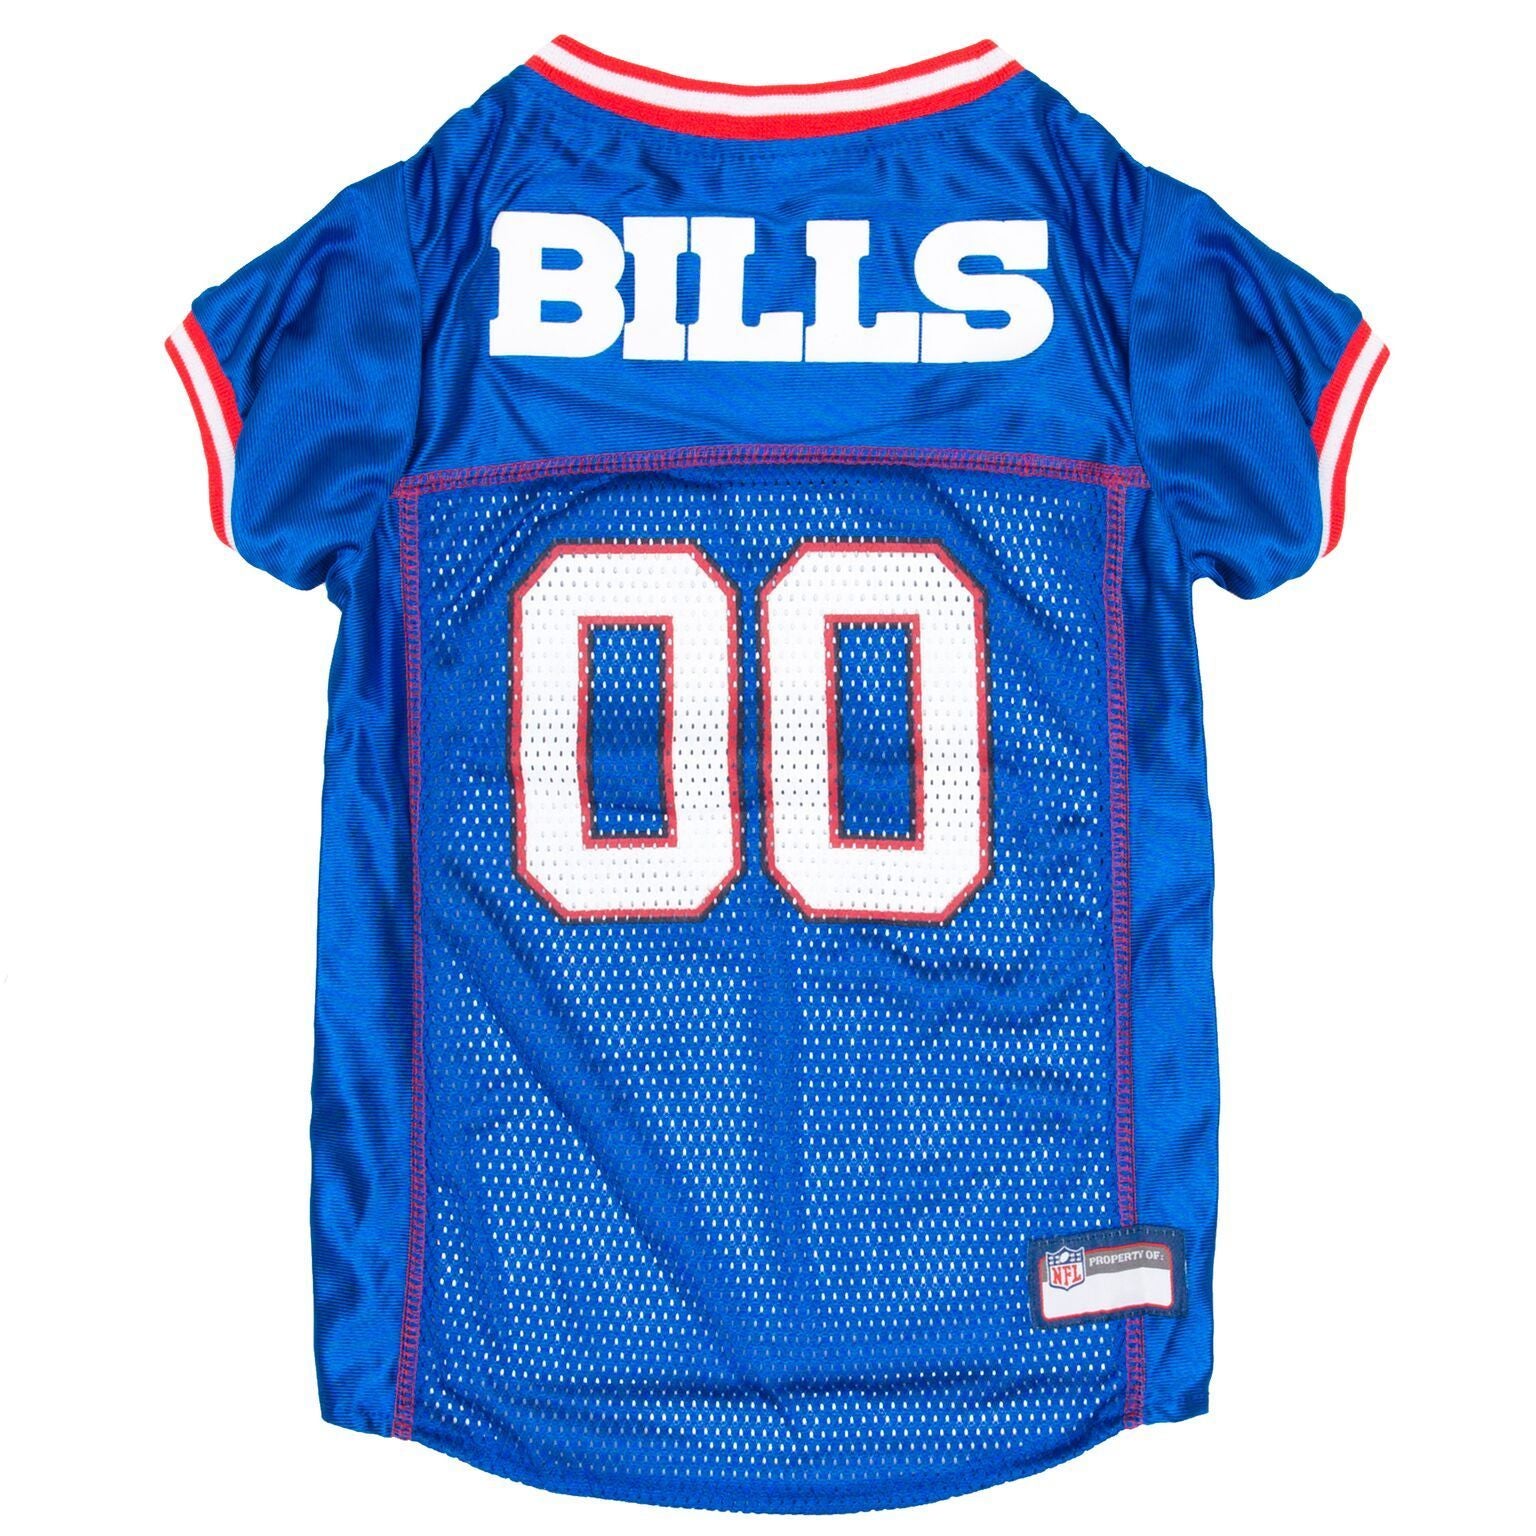 bills football jersey